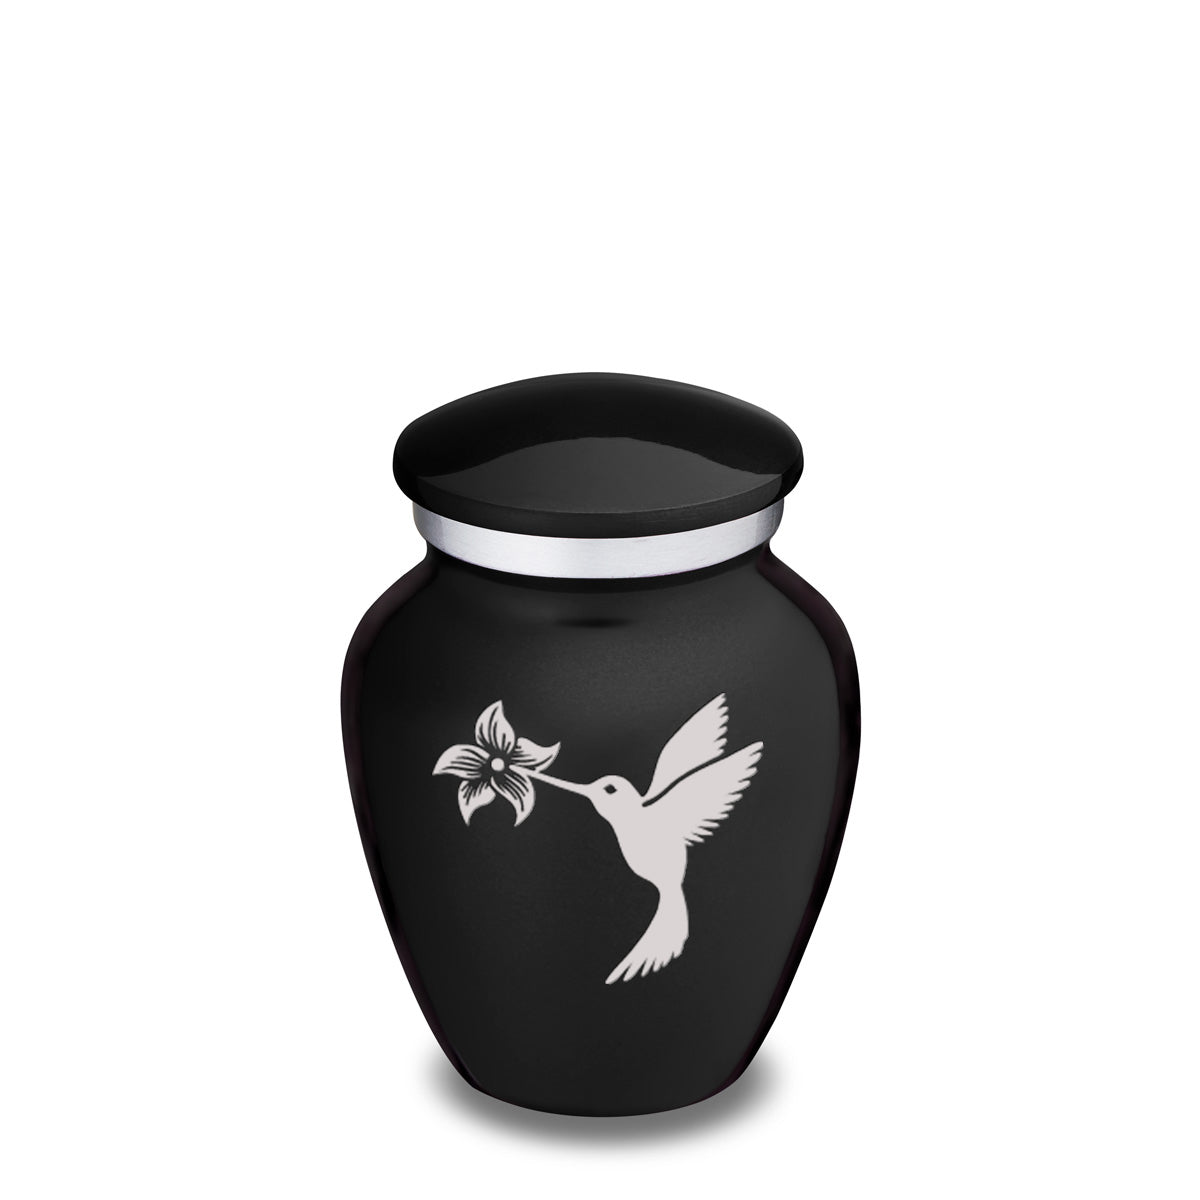 Keepsake Embrace Black Hummingbird Cremation Urn